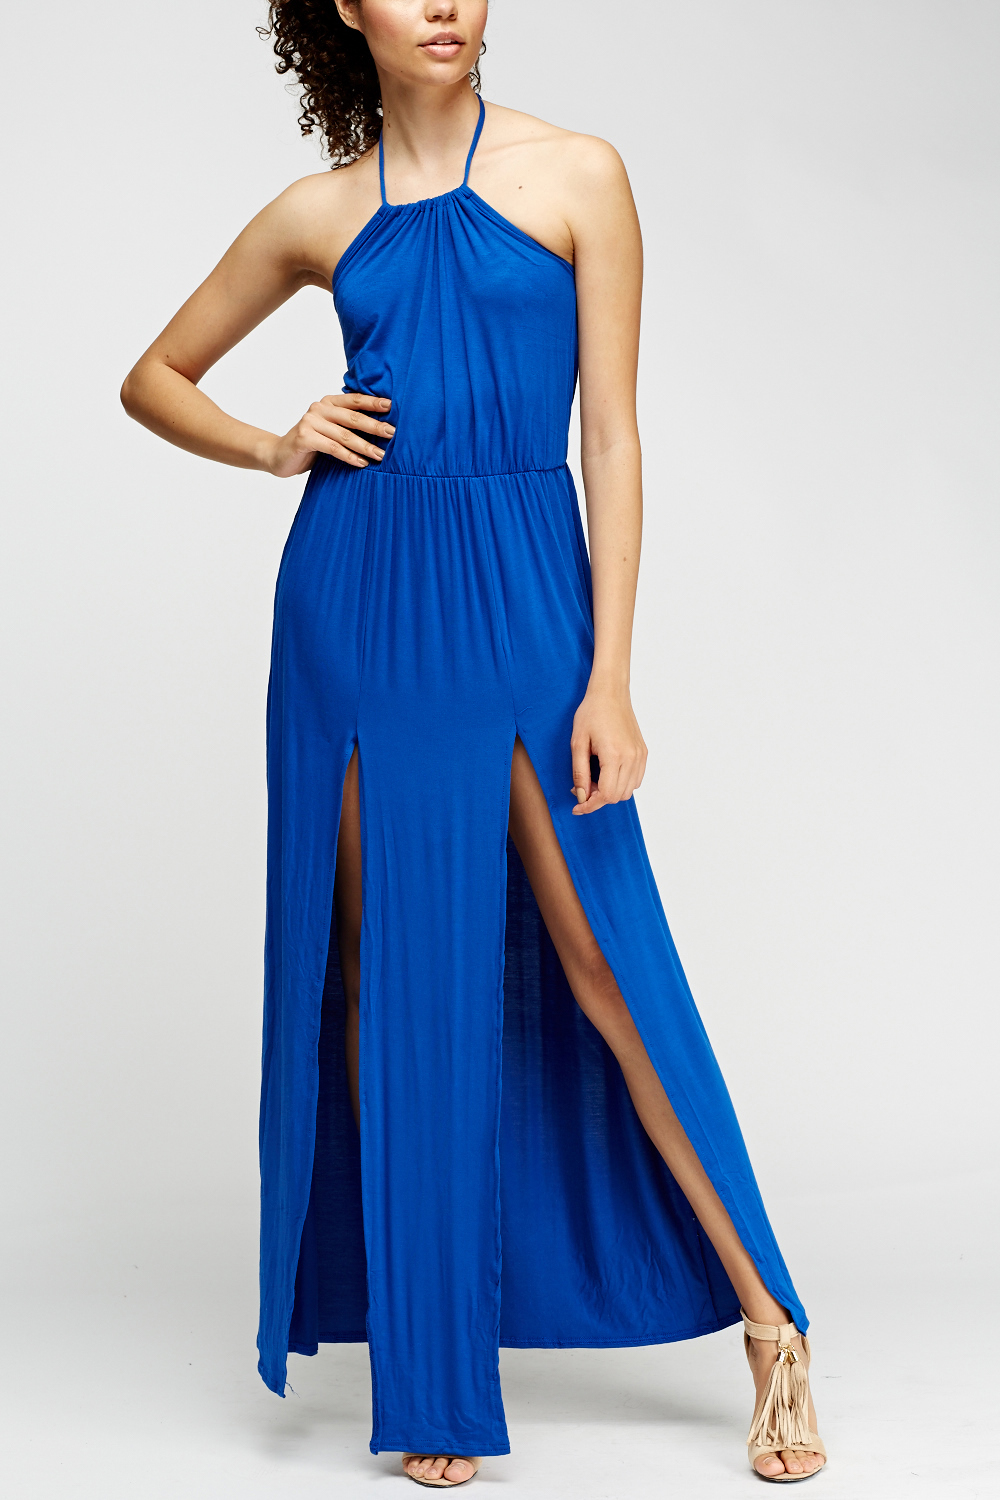 Royal Blue Halter Neck Maxi Dress - Just $7